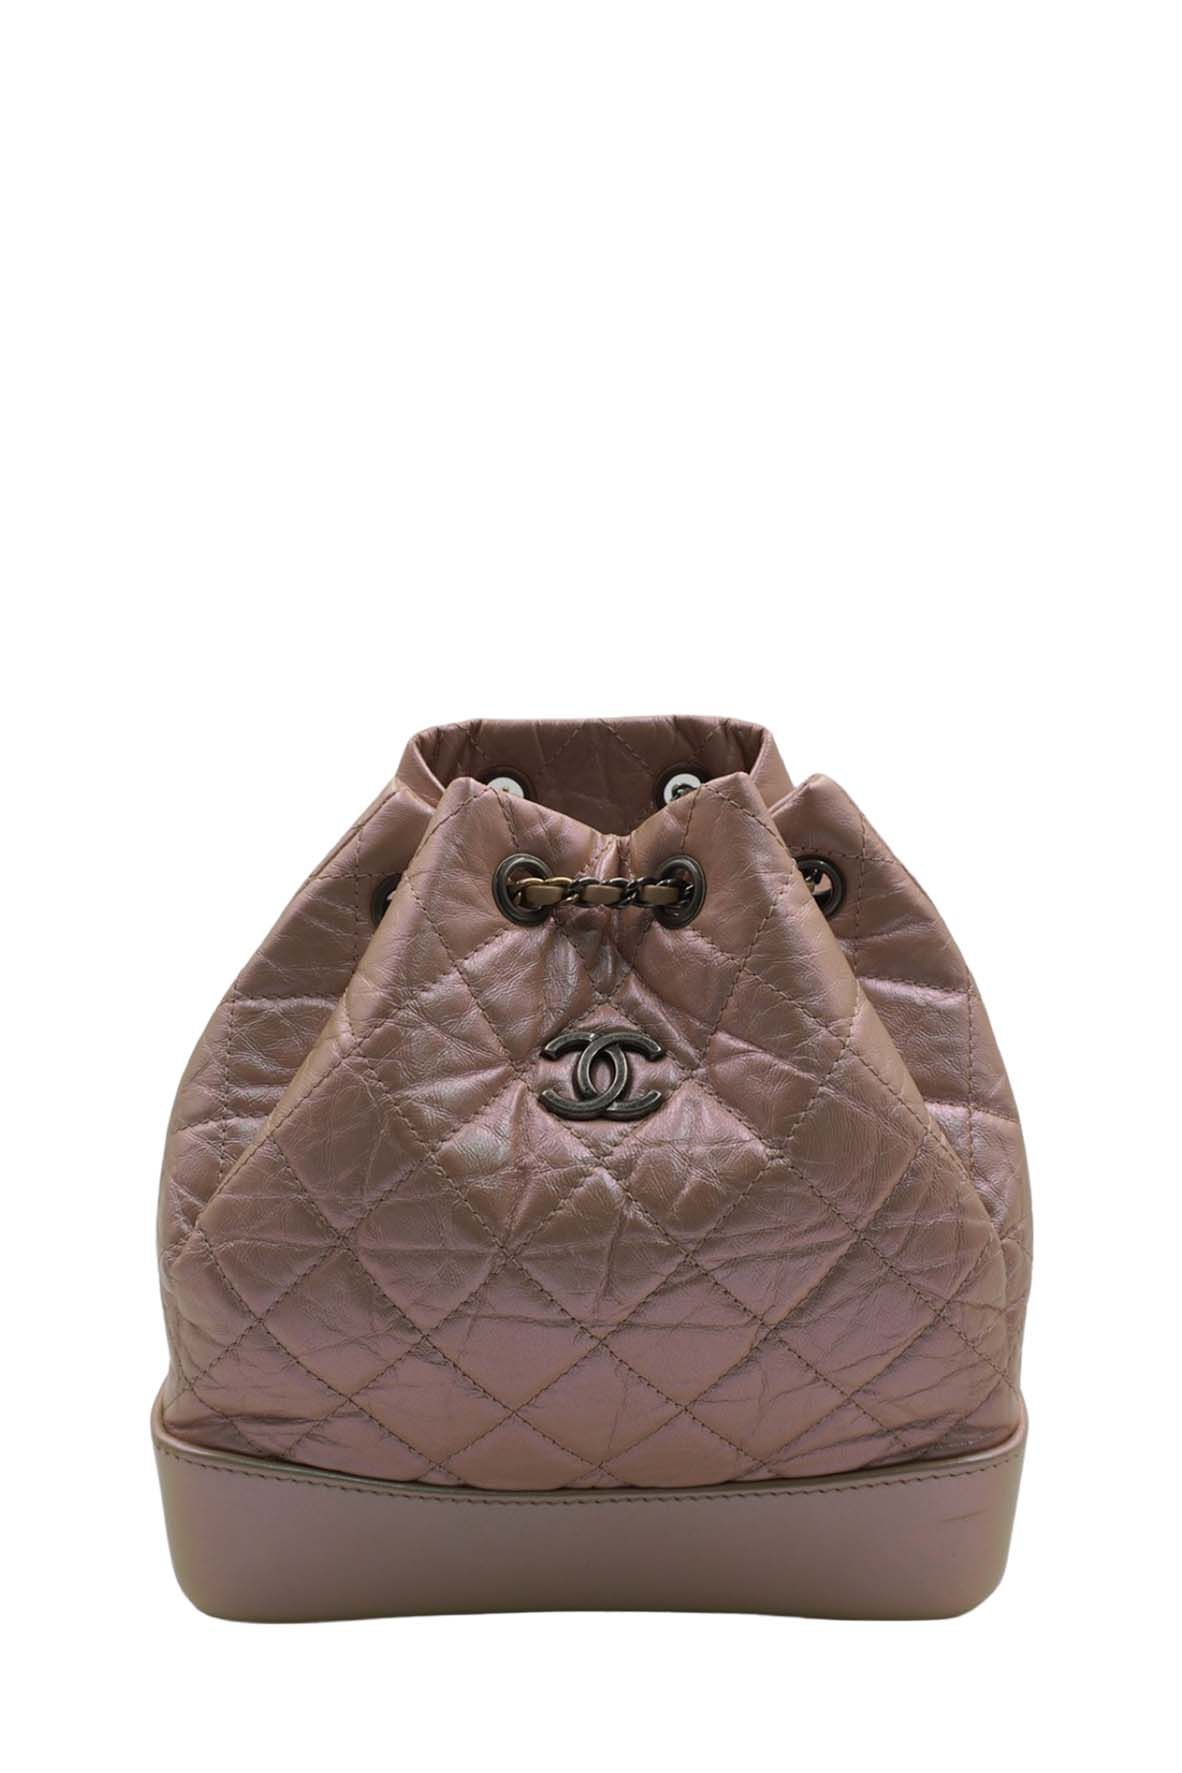 Chanel Small Gabrielle Backpack Black Aged Calfskin Multi-tone